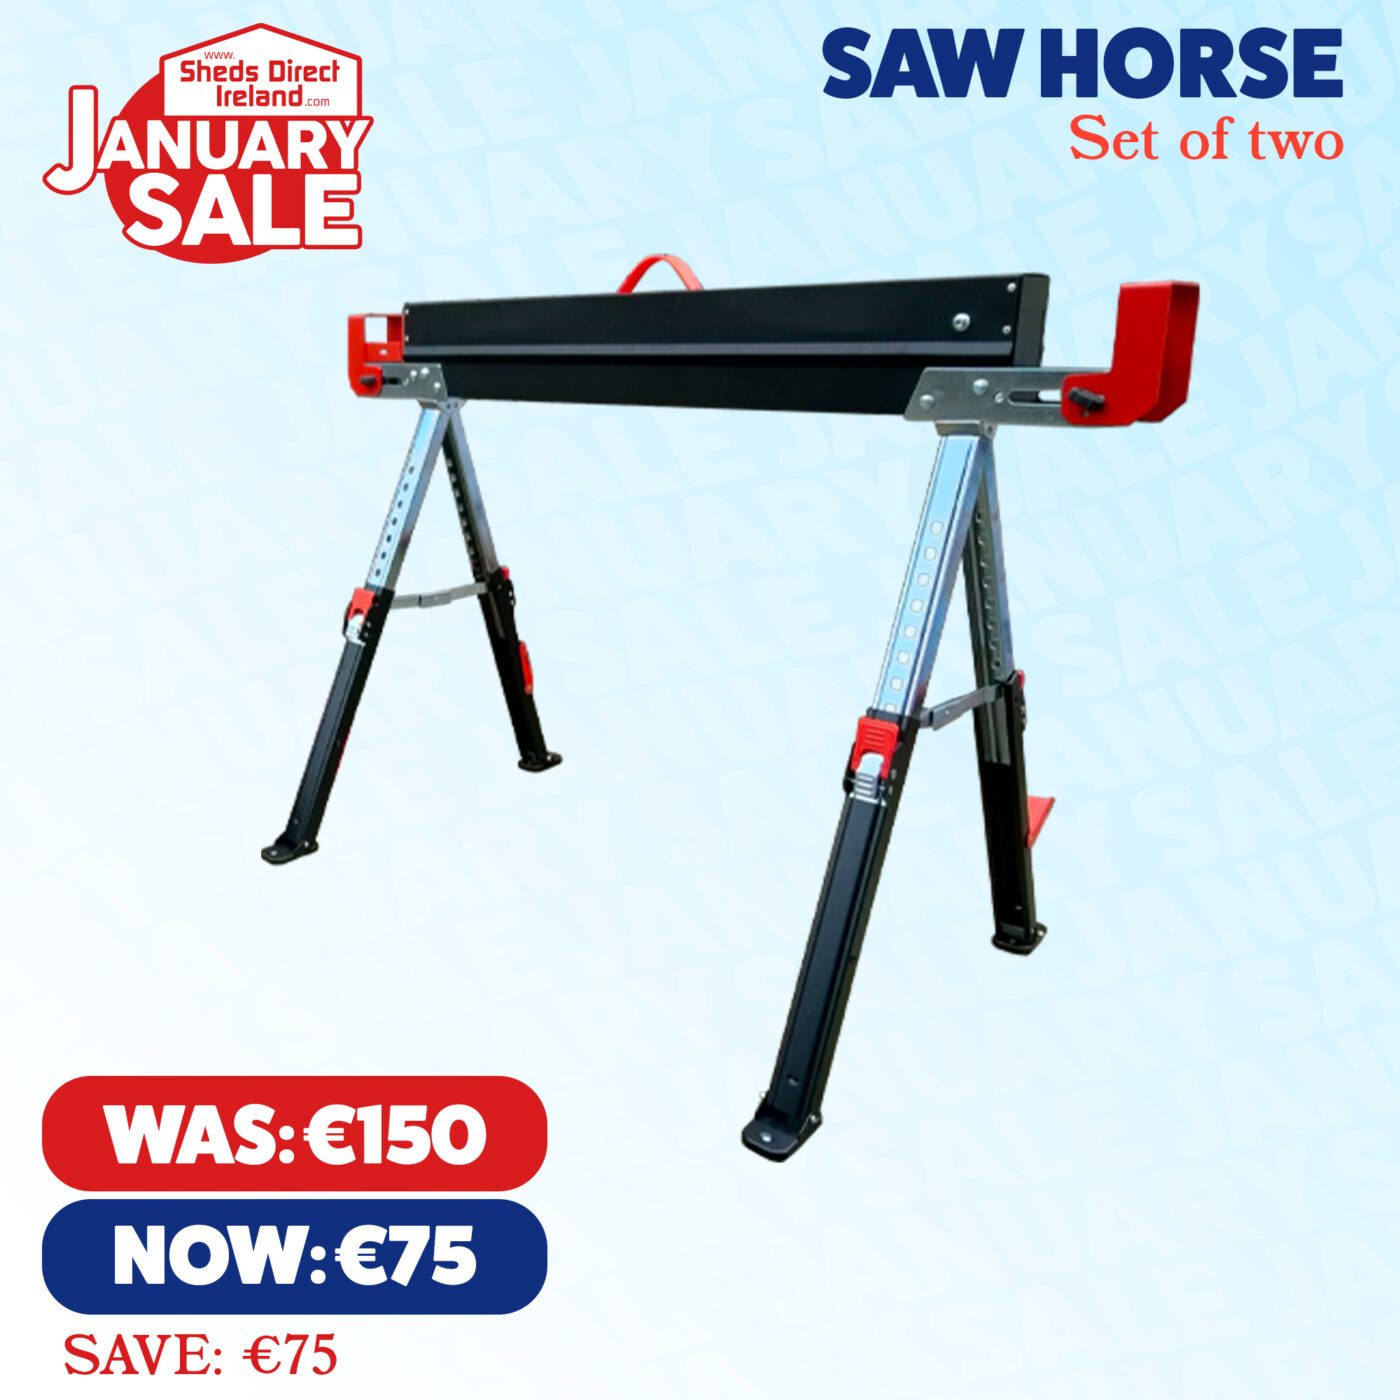 January Sale - Saw Horse